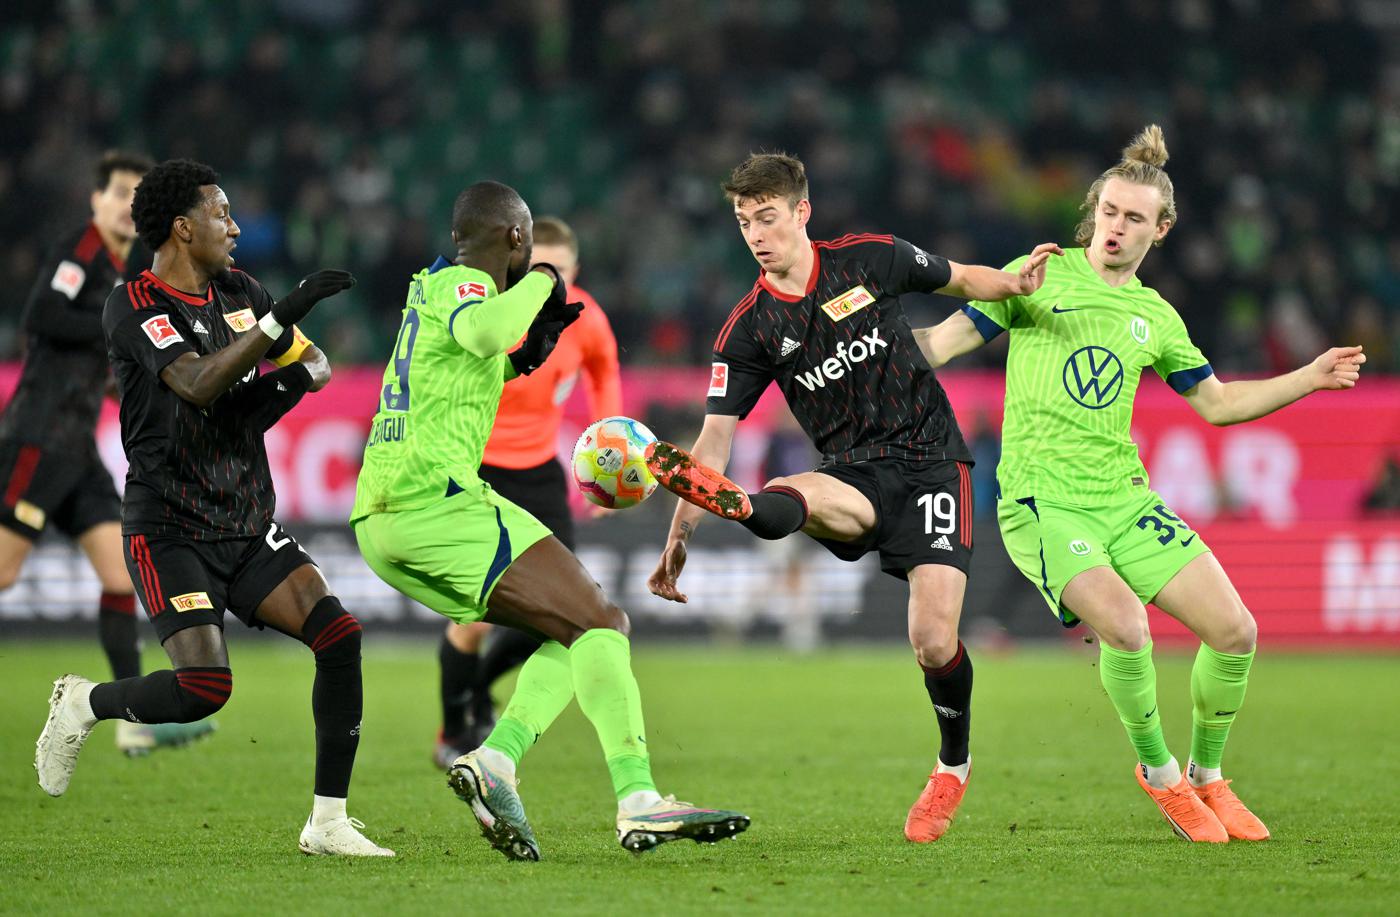 Wolfsburg v Union - 1:1. German Championship, round 24. Match Review, Statistics